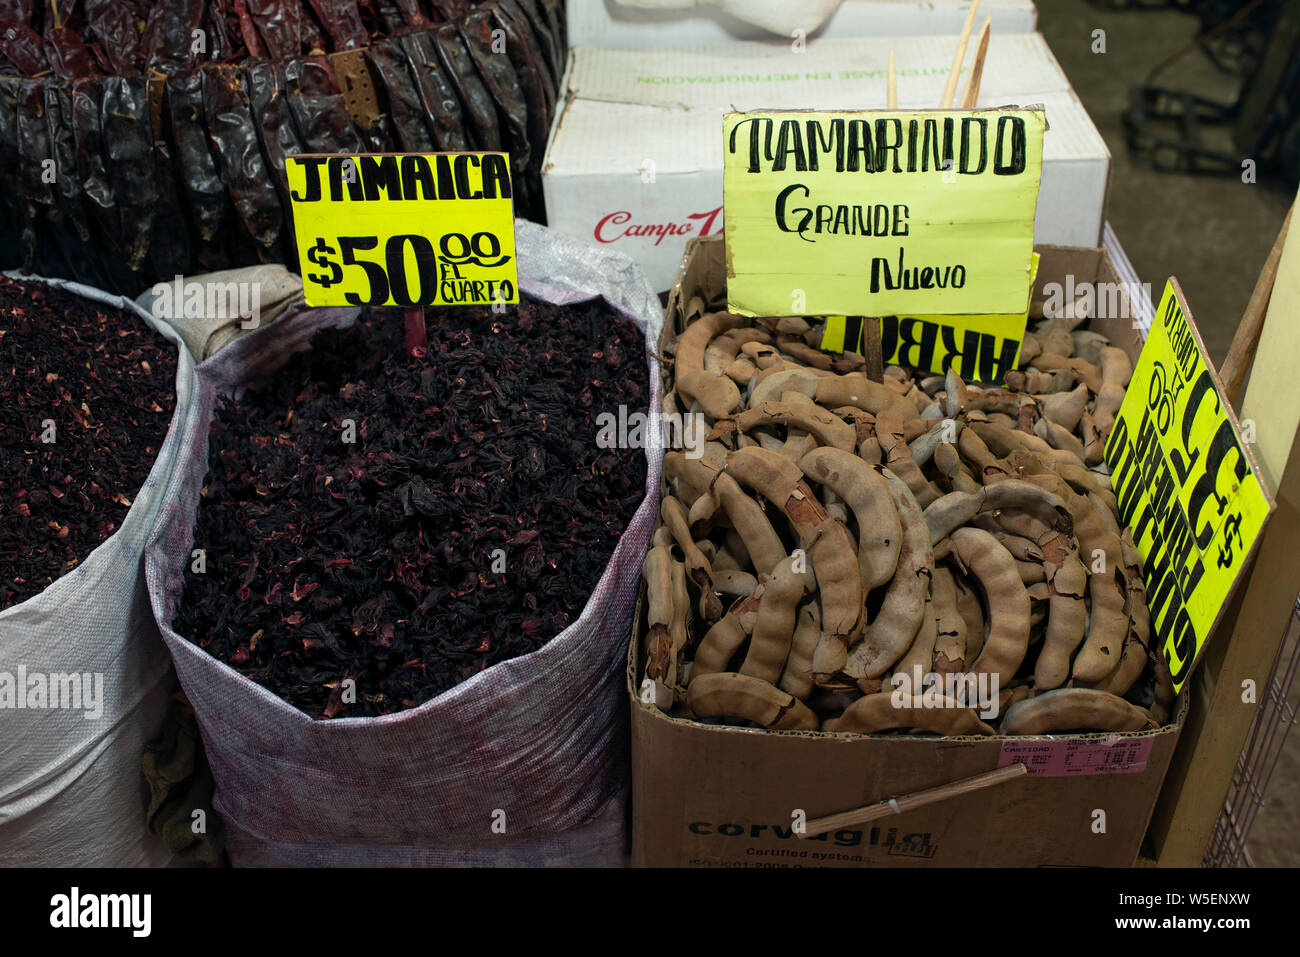 Close-up of natural products, such as Jamaica or Tamarindo for sale in La Merced (Mercado De La Merced) in Mexico City, CDMX, Mexico. Jun 2019 Stock Photo